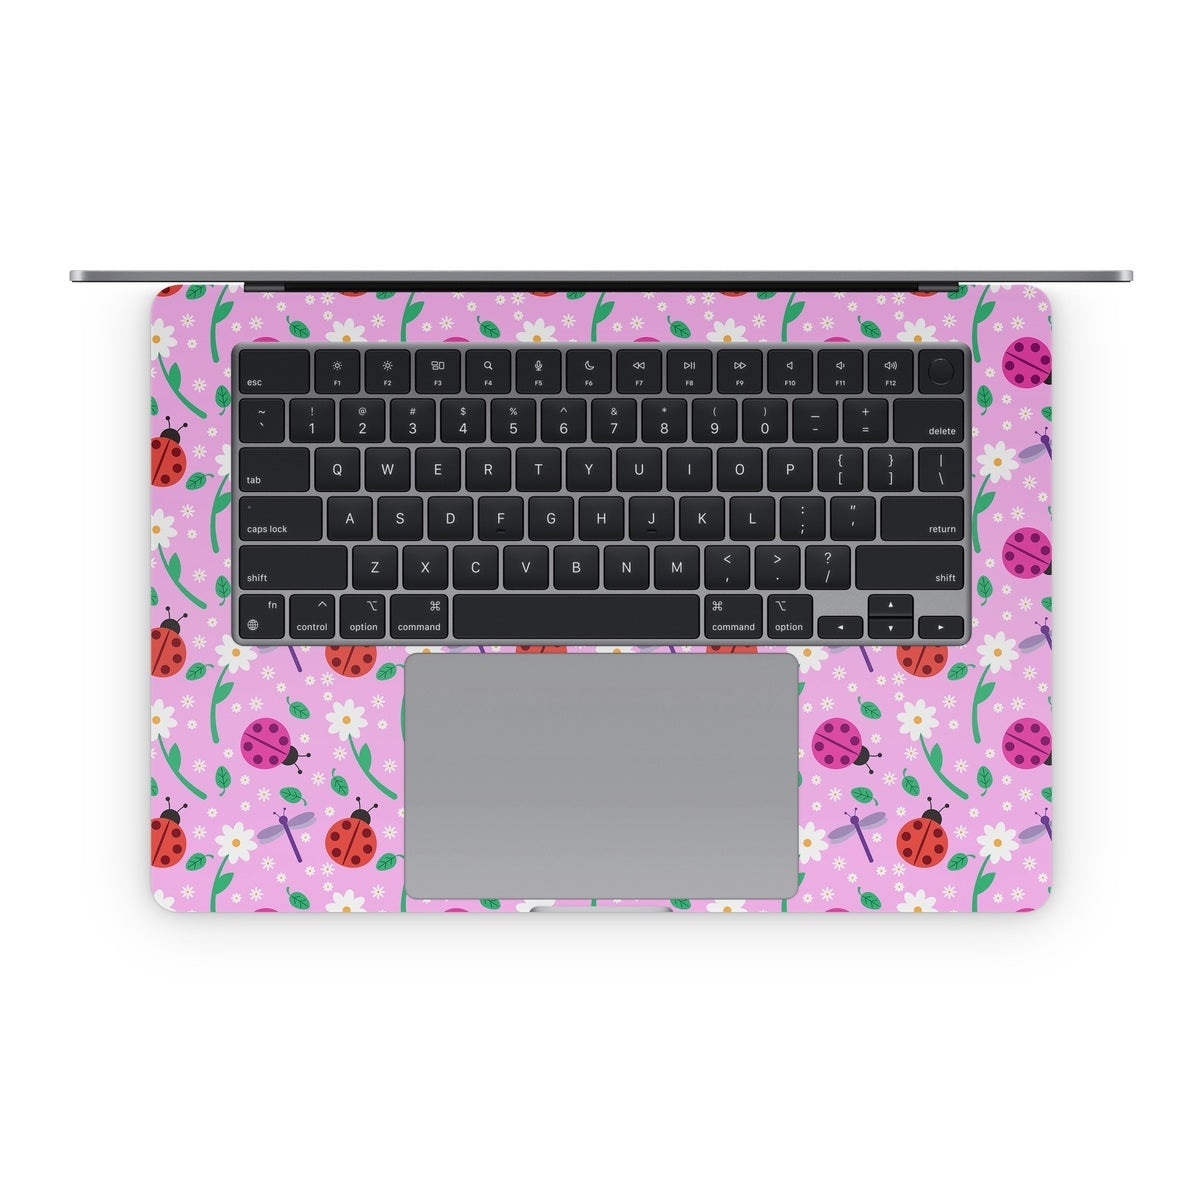 Ladybug Land - Apple MacBook Skin